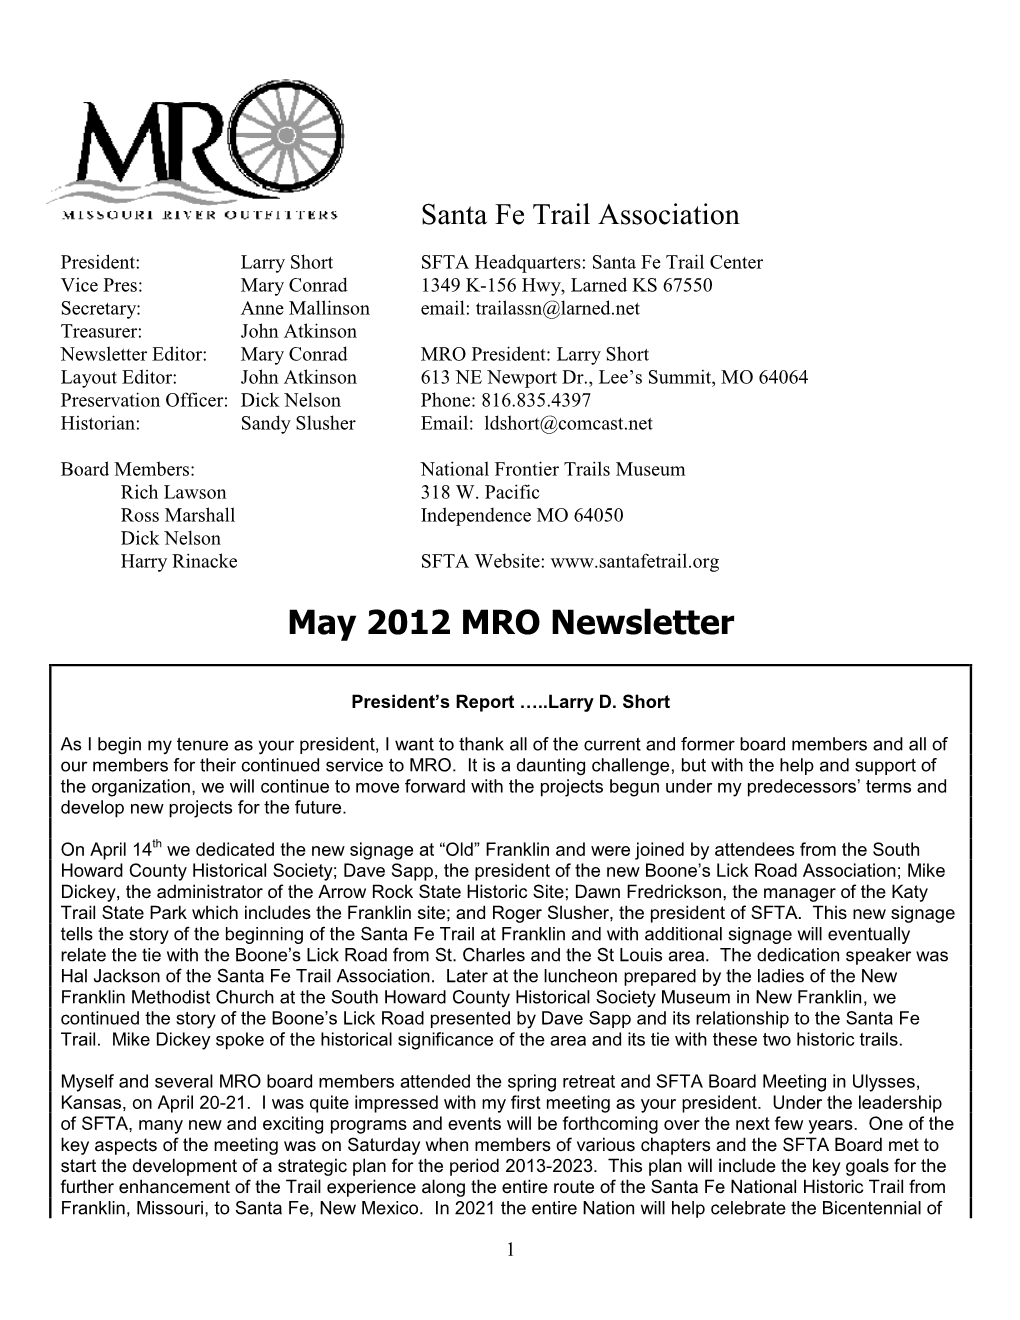 May 2012 MRO Newsletter